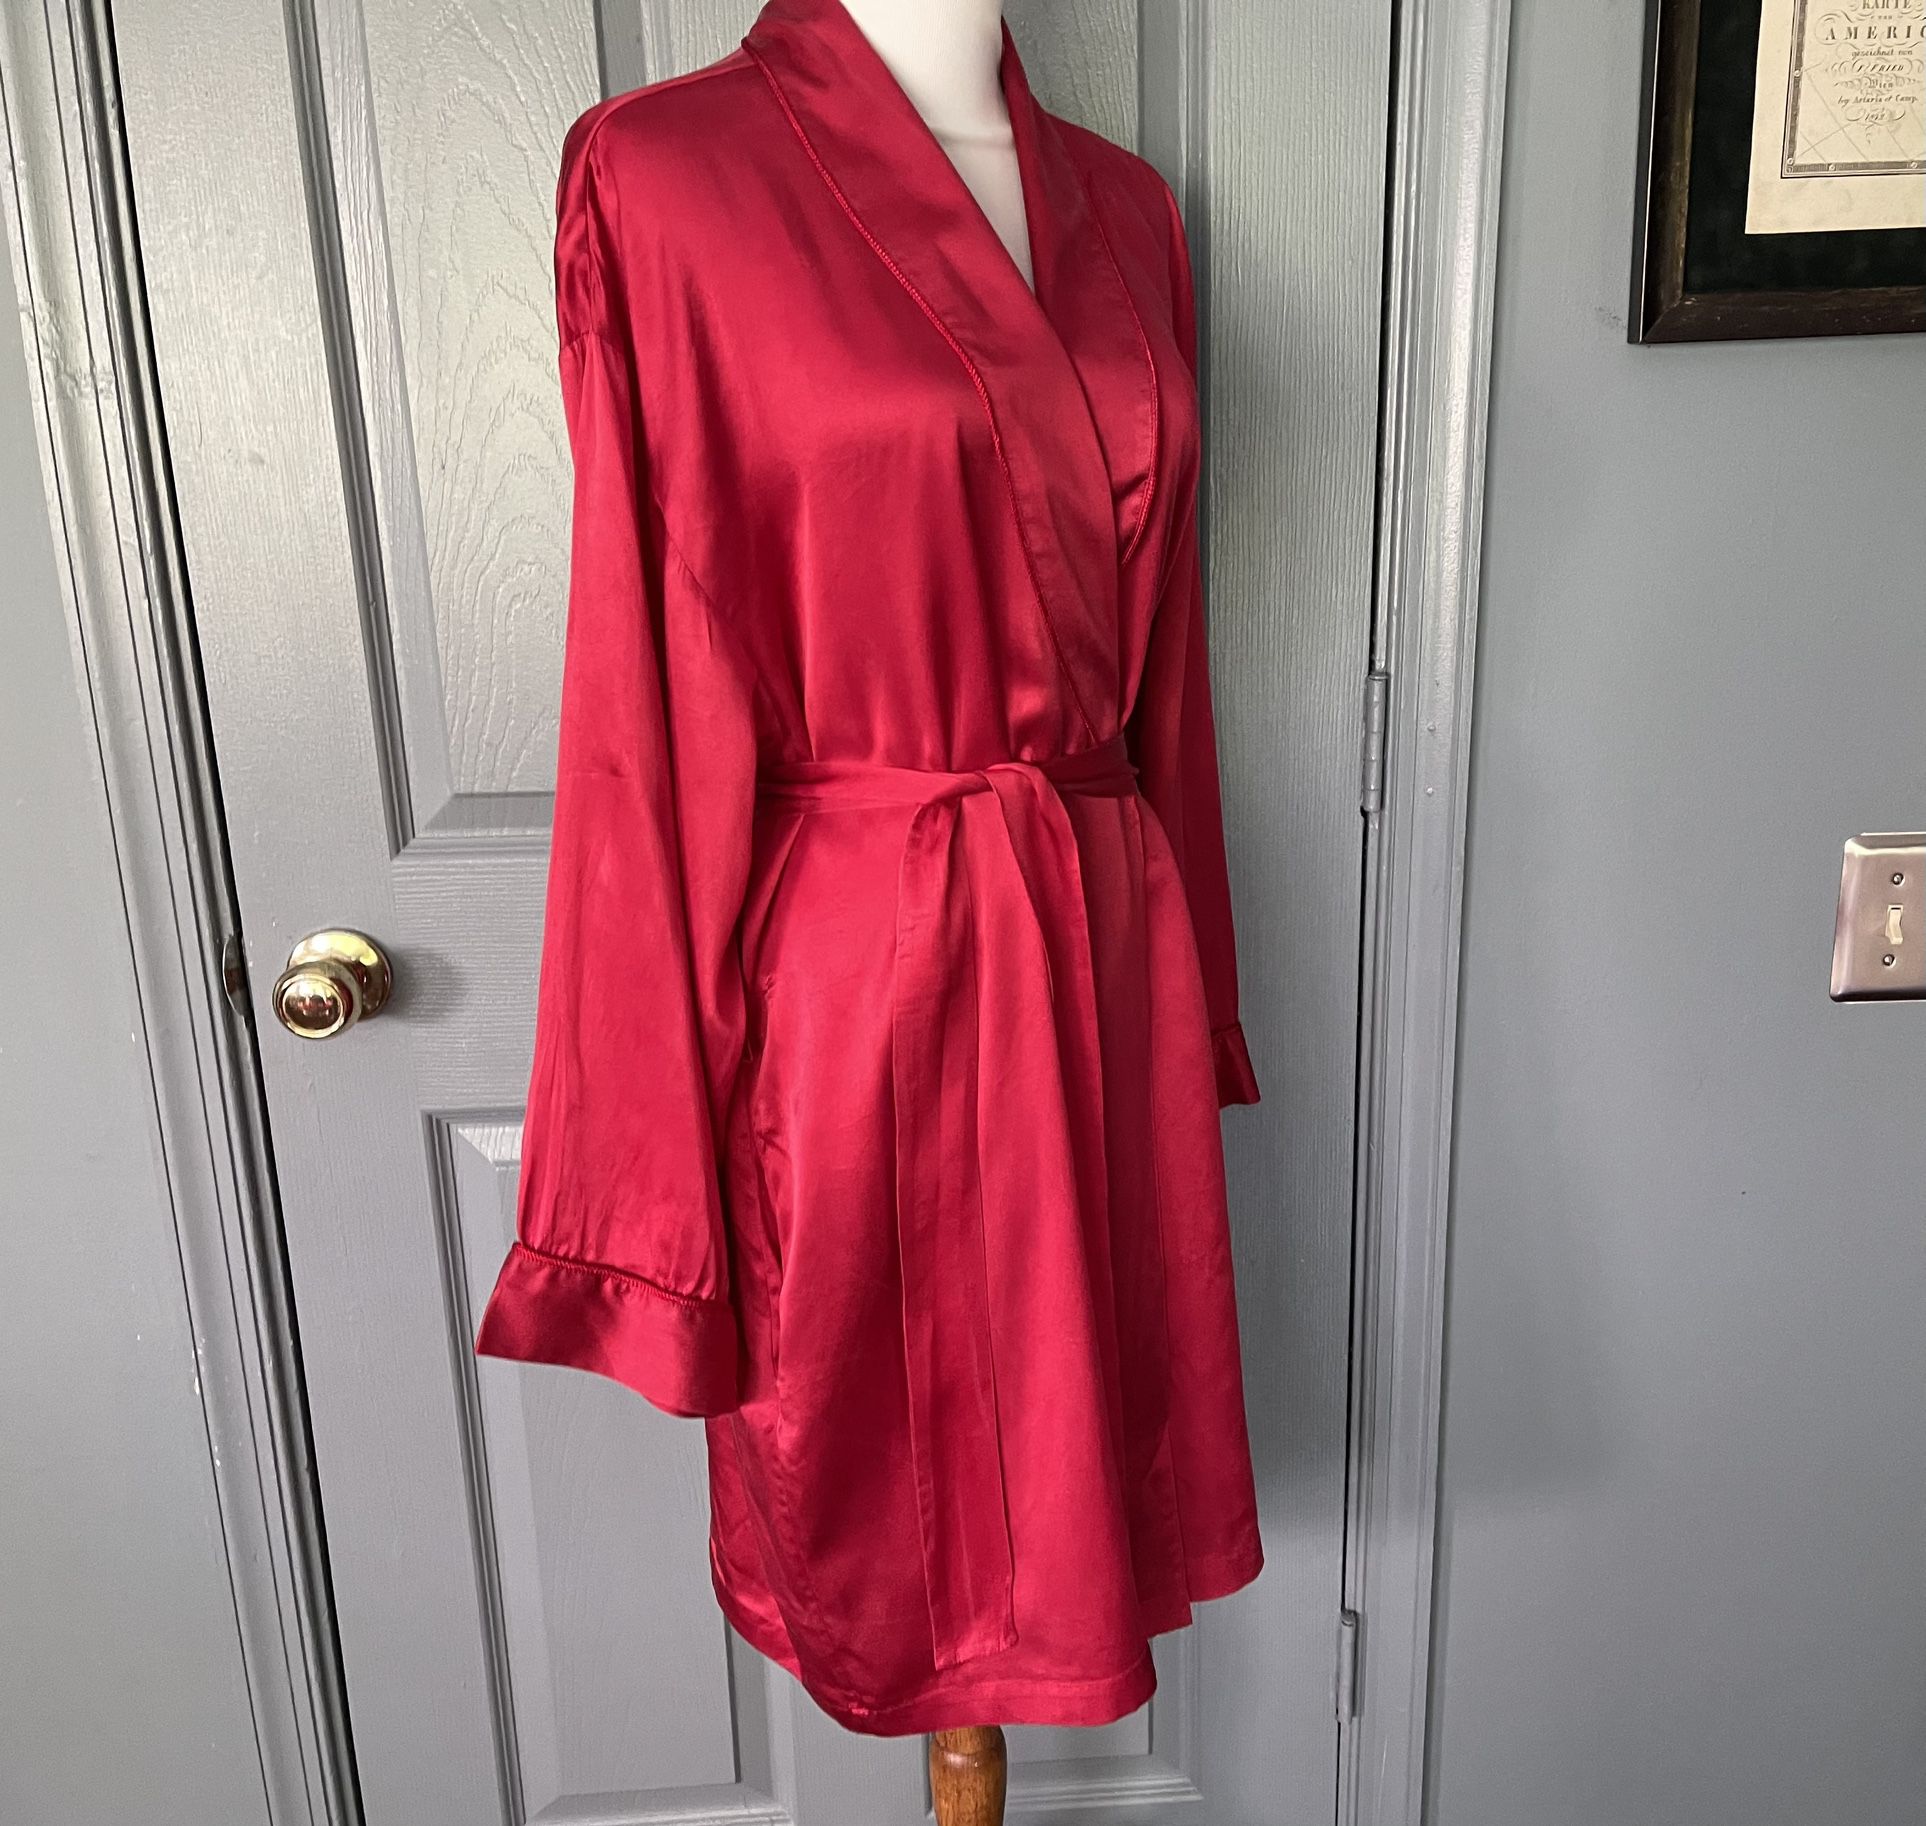 Venchelle 100% Silk Vintage Red Lingerie Kimono Robe. Size Large. 